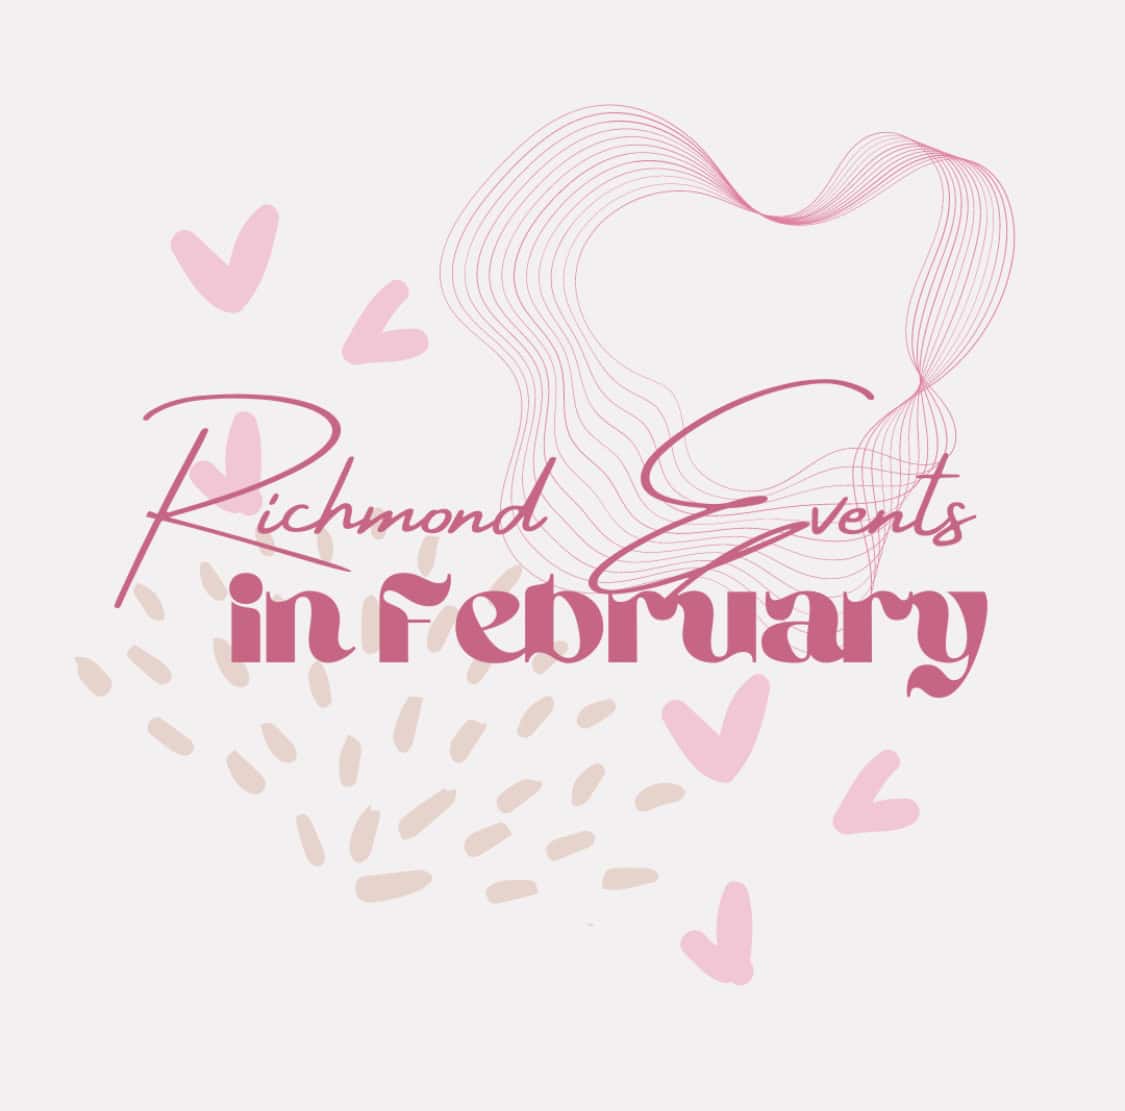 Events around Richmond during February LaptrinhX / News